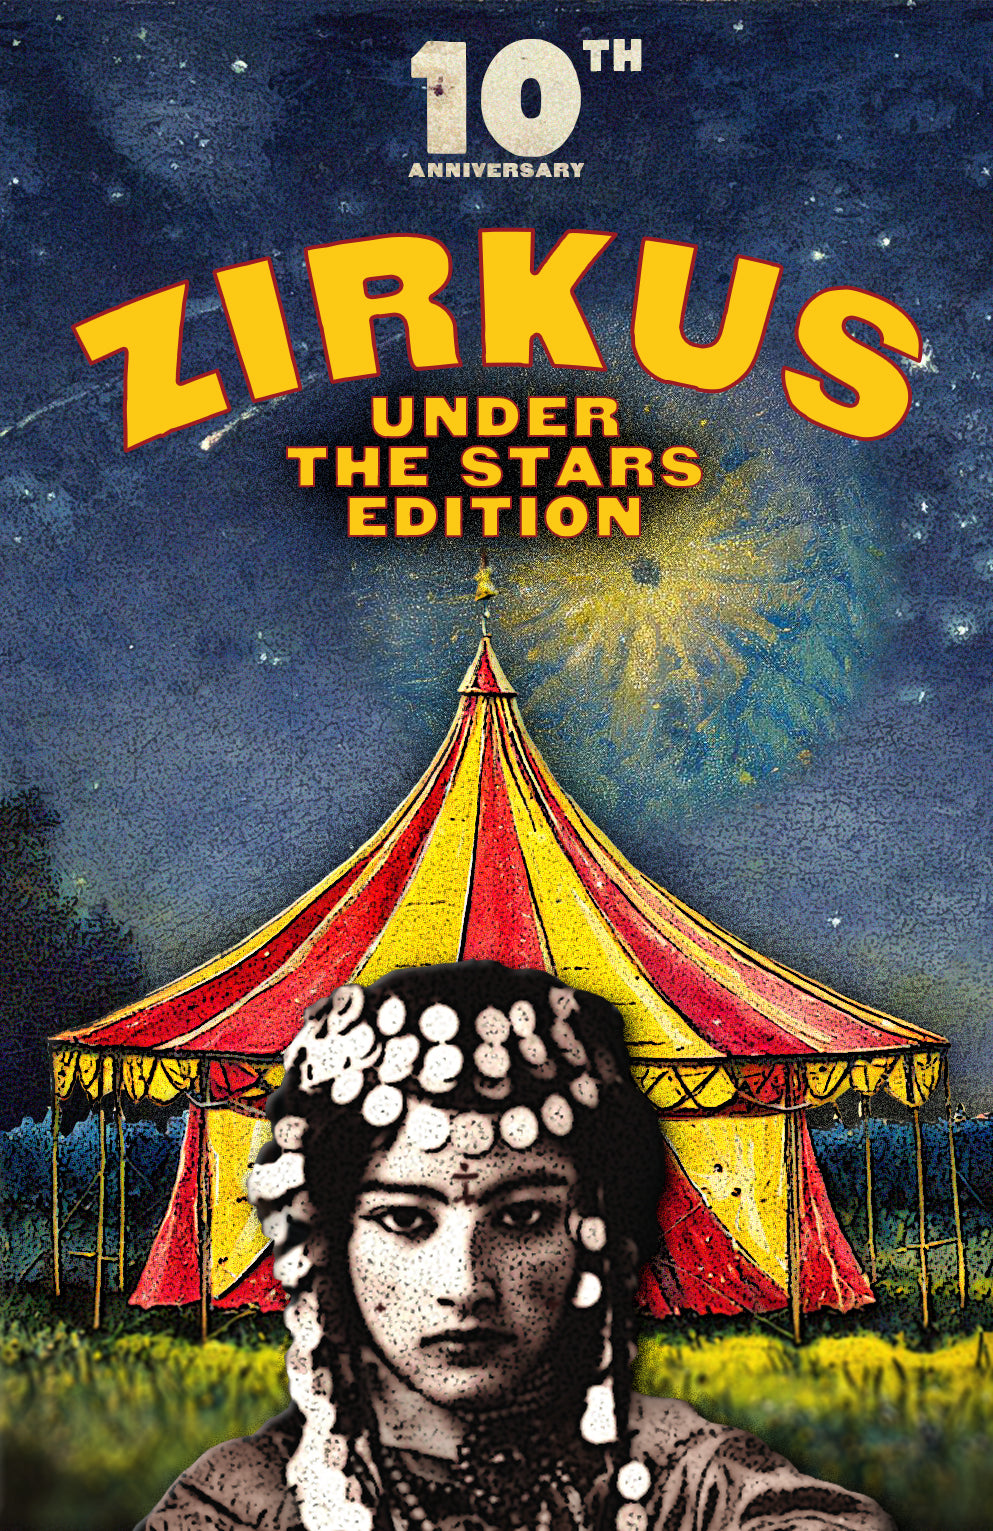 Nights at the Zirkus